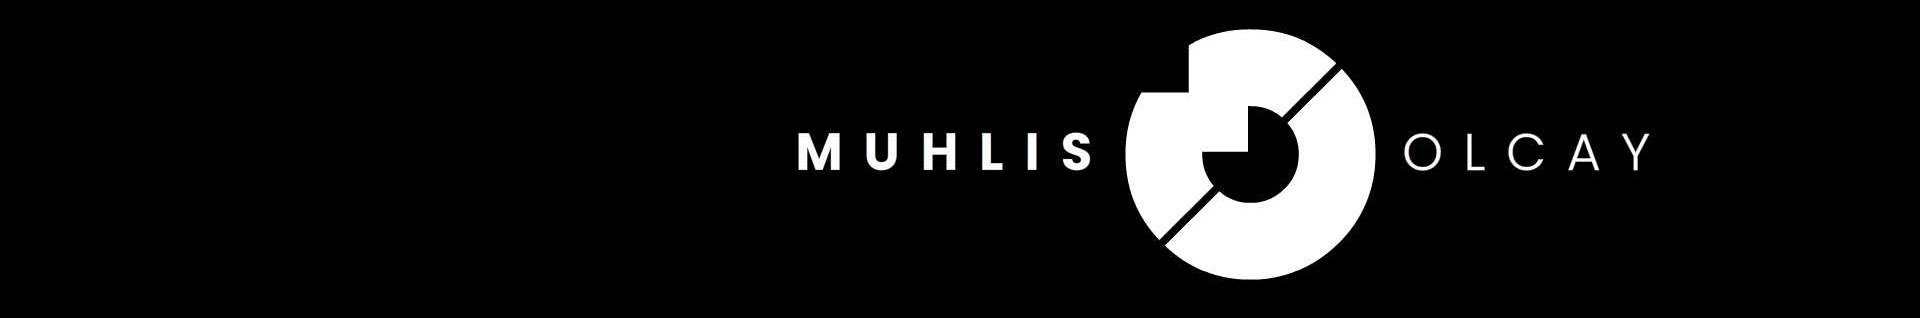 Muhlis Olcay's profile banner